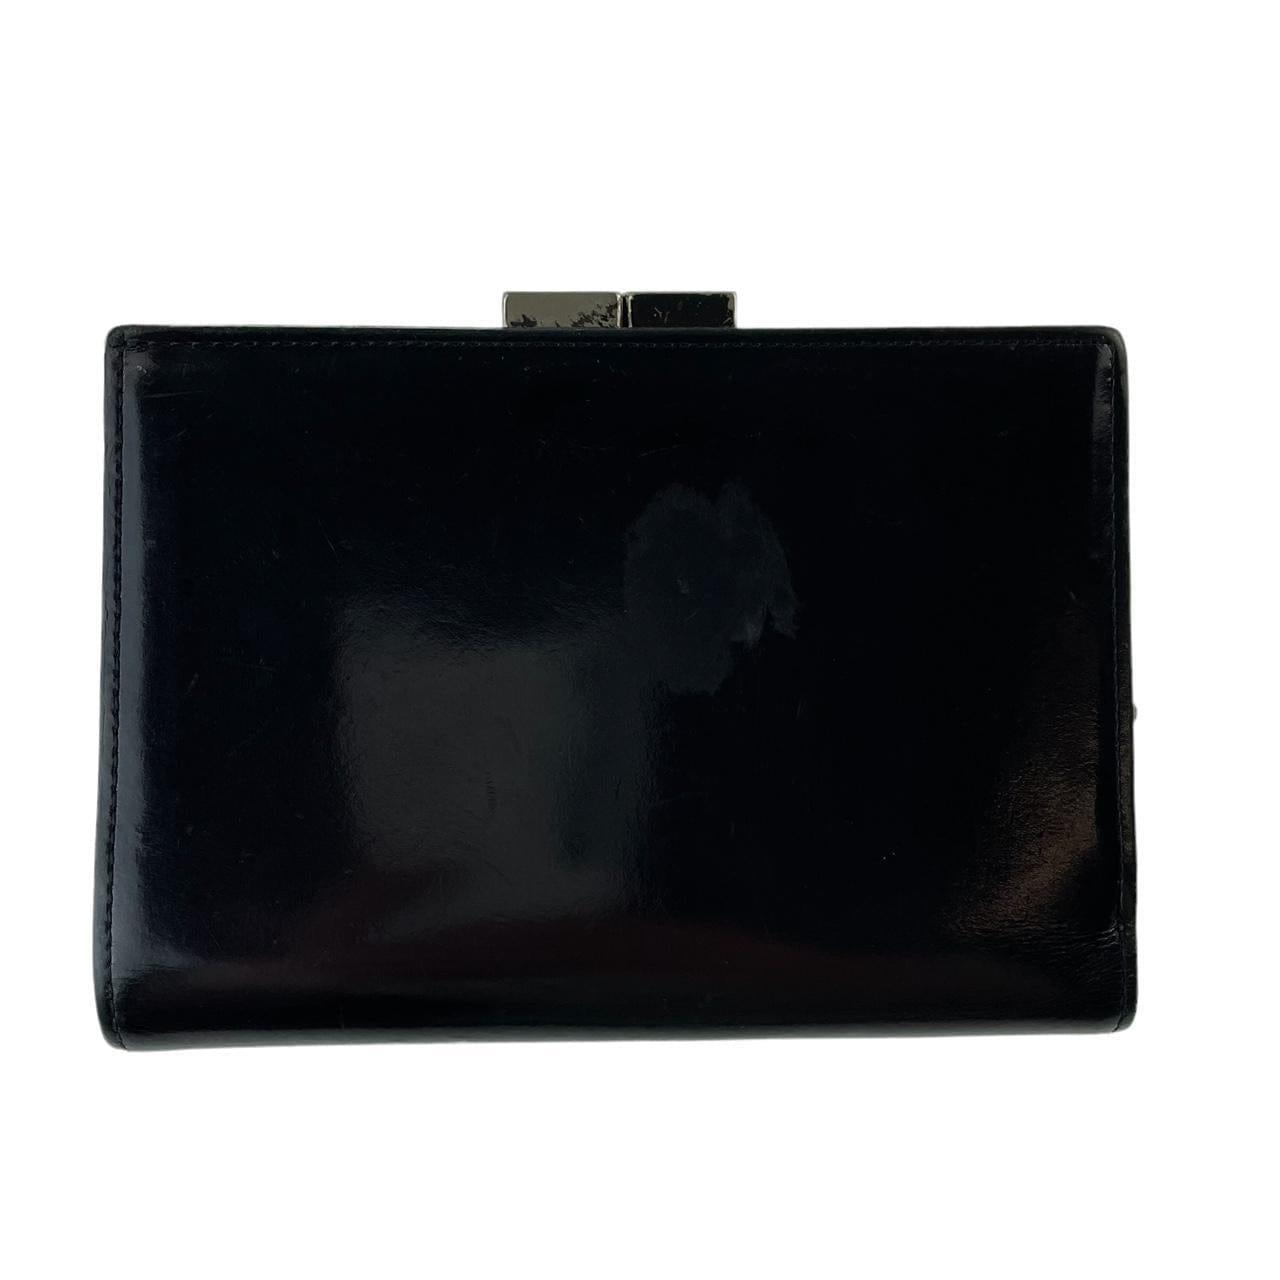 Vintage JPG Jean Paul Gaultier purse - Known Source